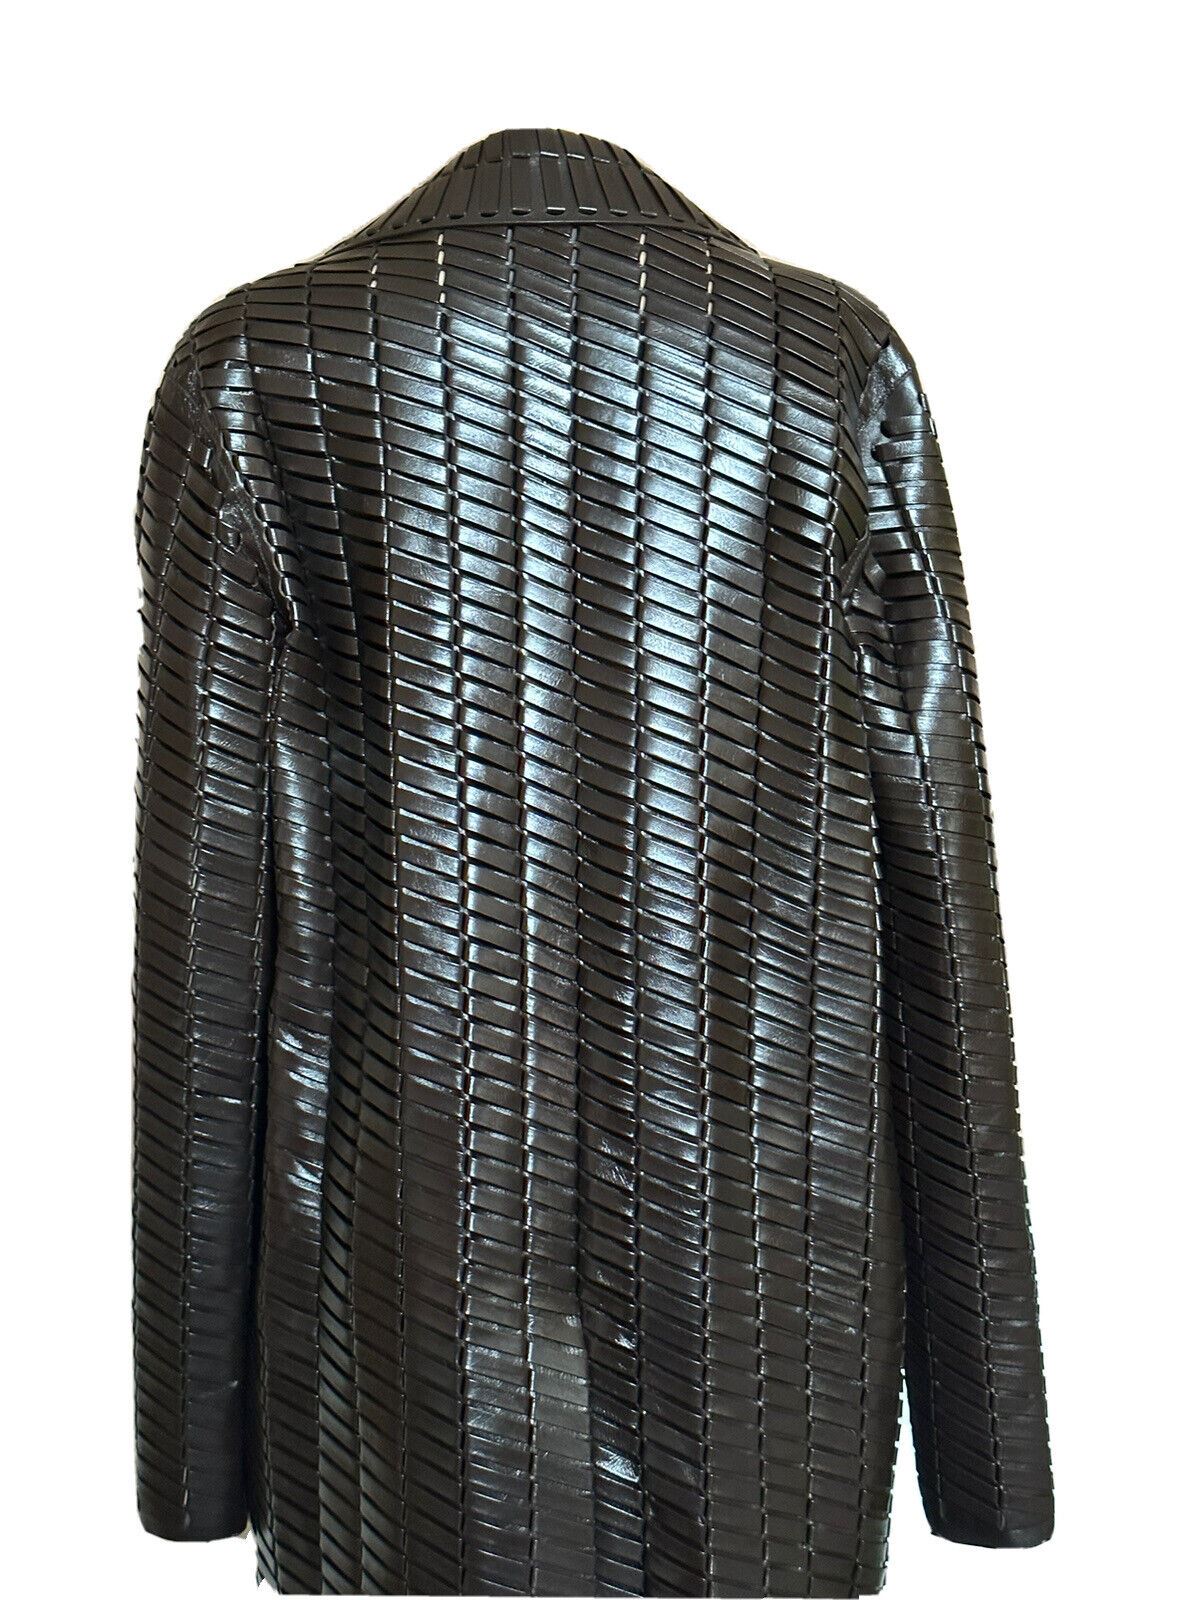 Neu mit Etikett: 14.900 $ Bottega Veneta Damen-Mantel aus gewebtem glänzendem Leder Schokolade 36R 618482 